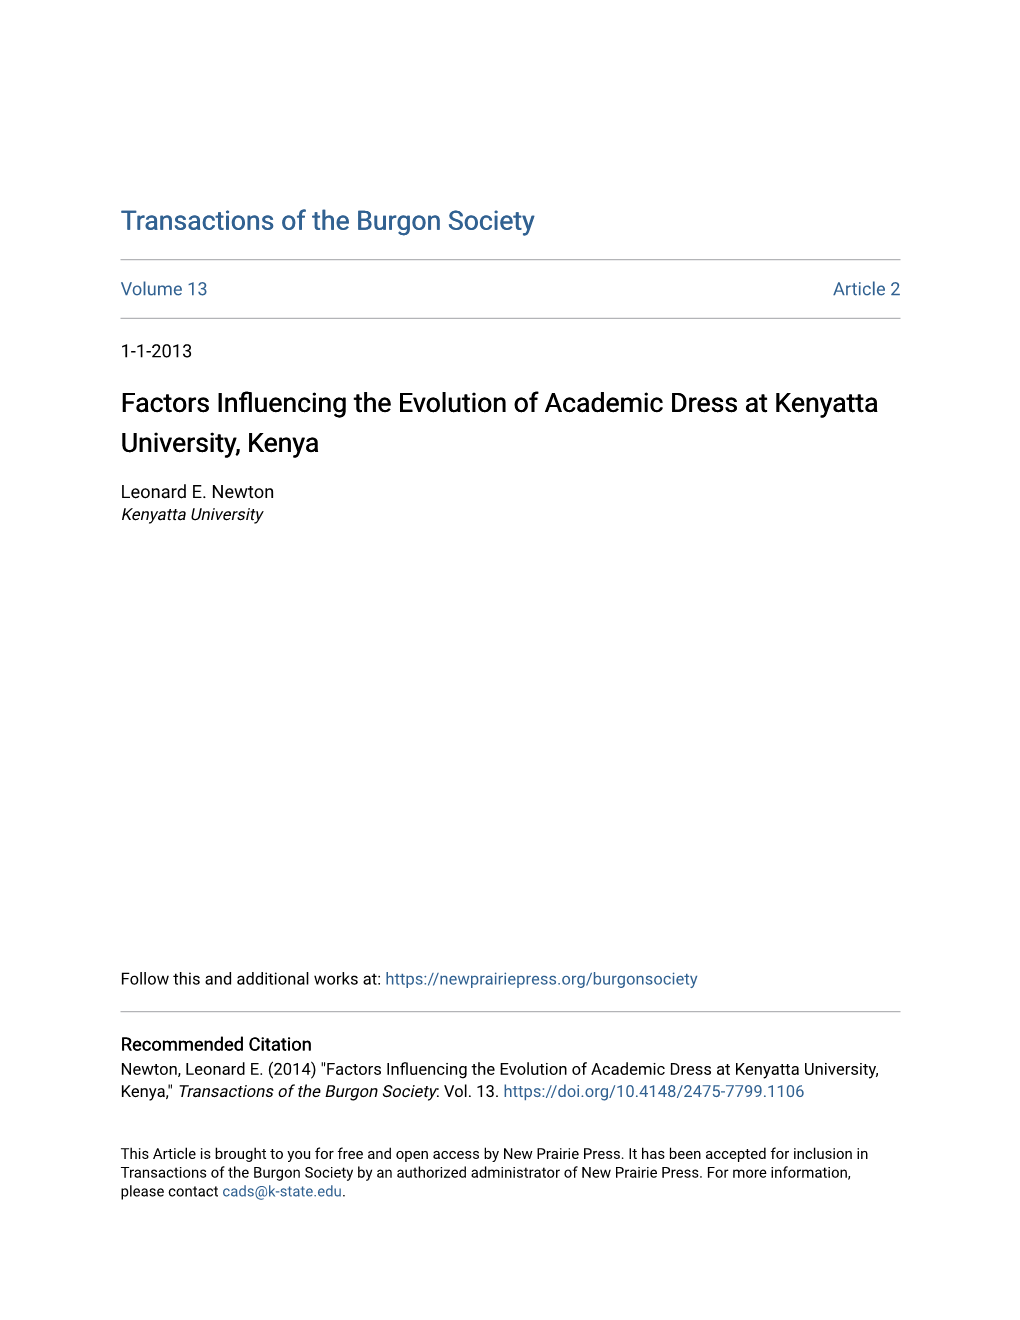 Factors Influencing the Evolution of Academic Dress at Kenyatta University, Kenya by Leonard E